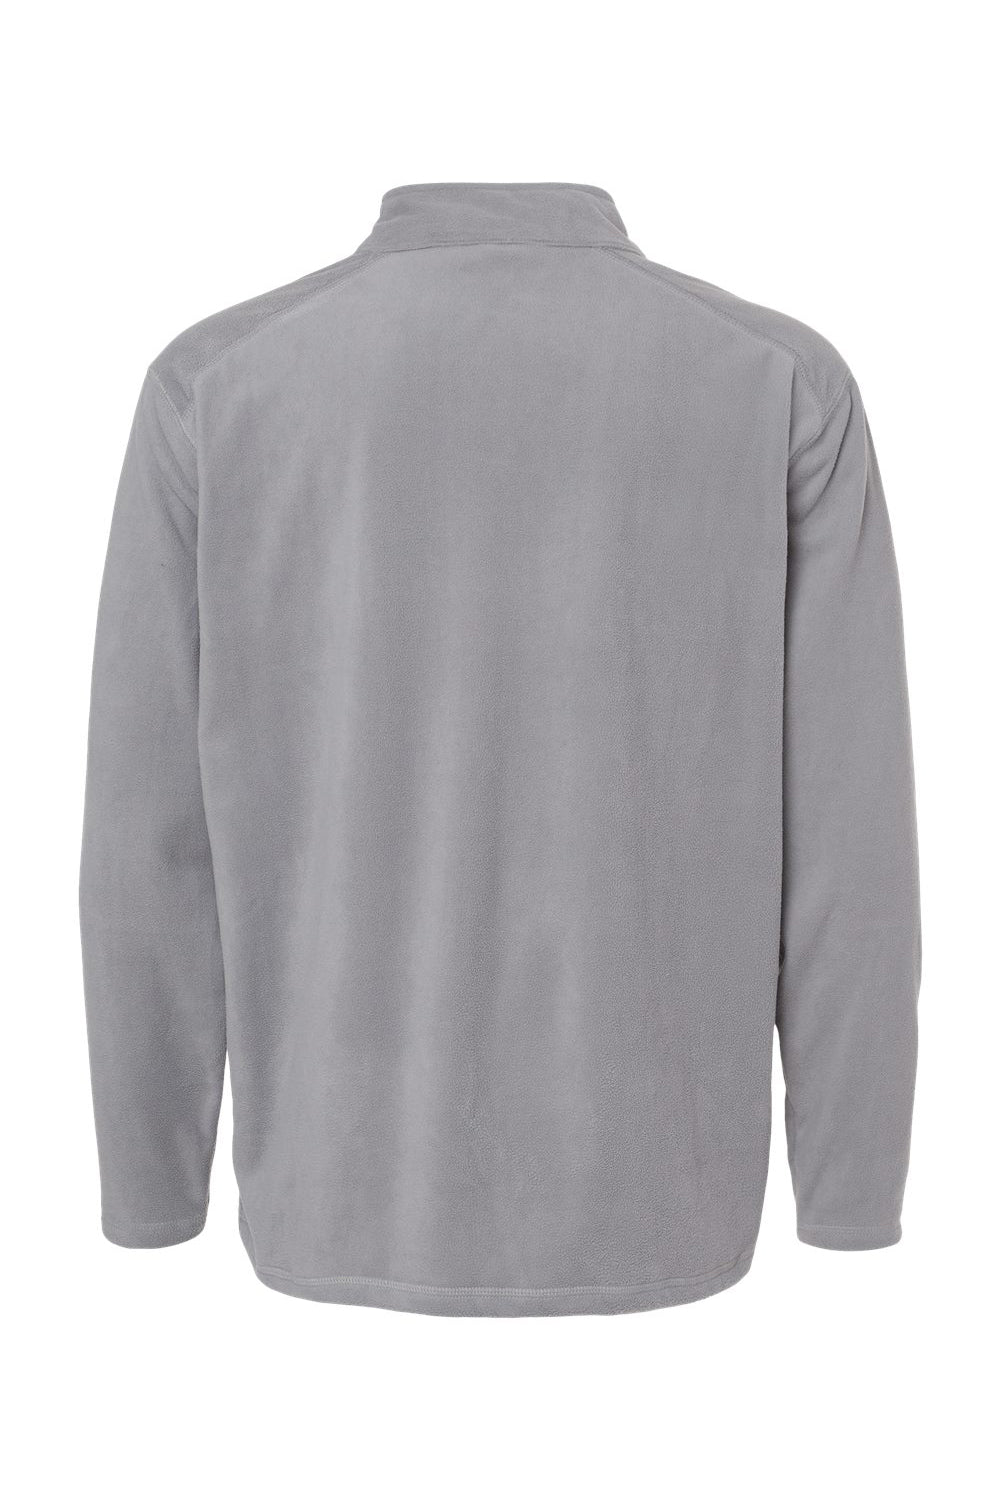 Augusta Sportswear 6863 Mens Eco Revive Micro Lite Fleece 1/4 Zip Sweatshirt Athletic Grey Flat Back